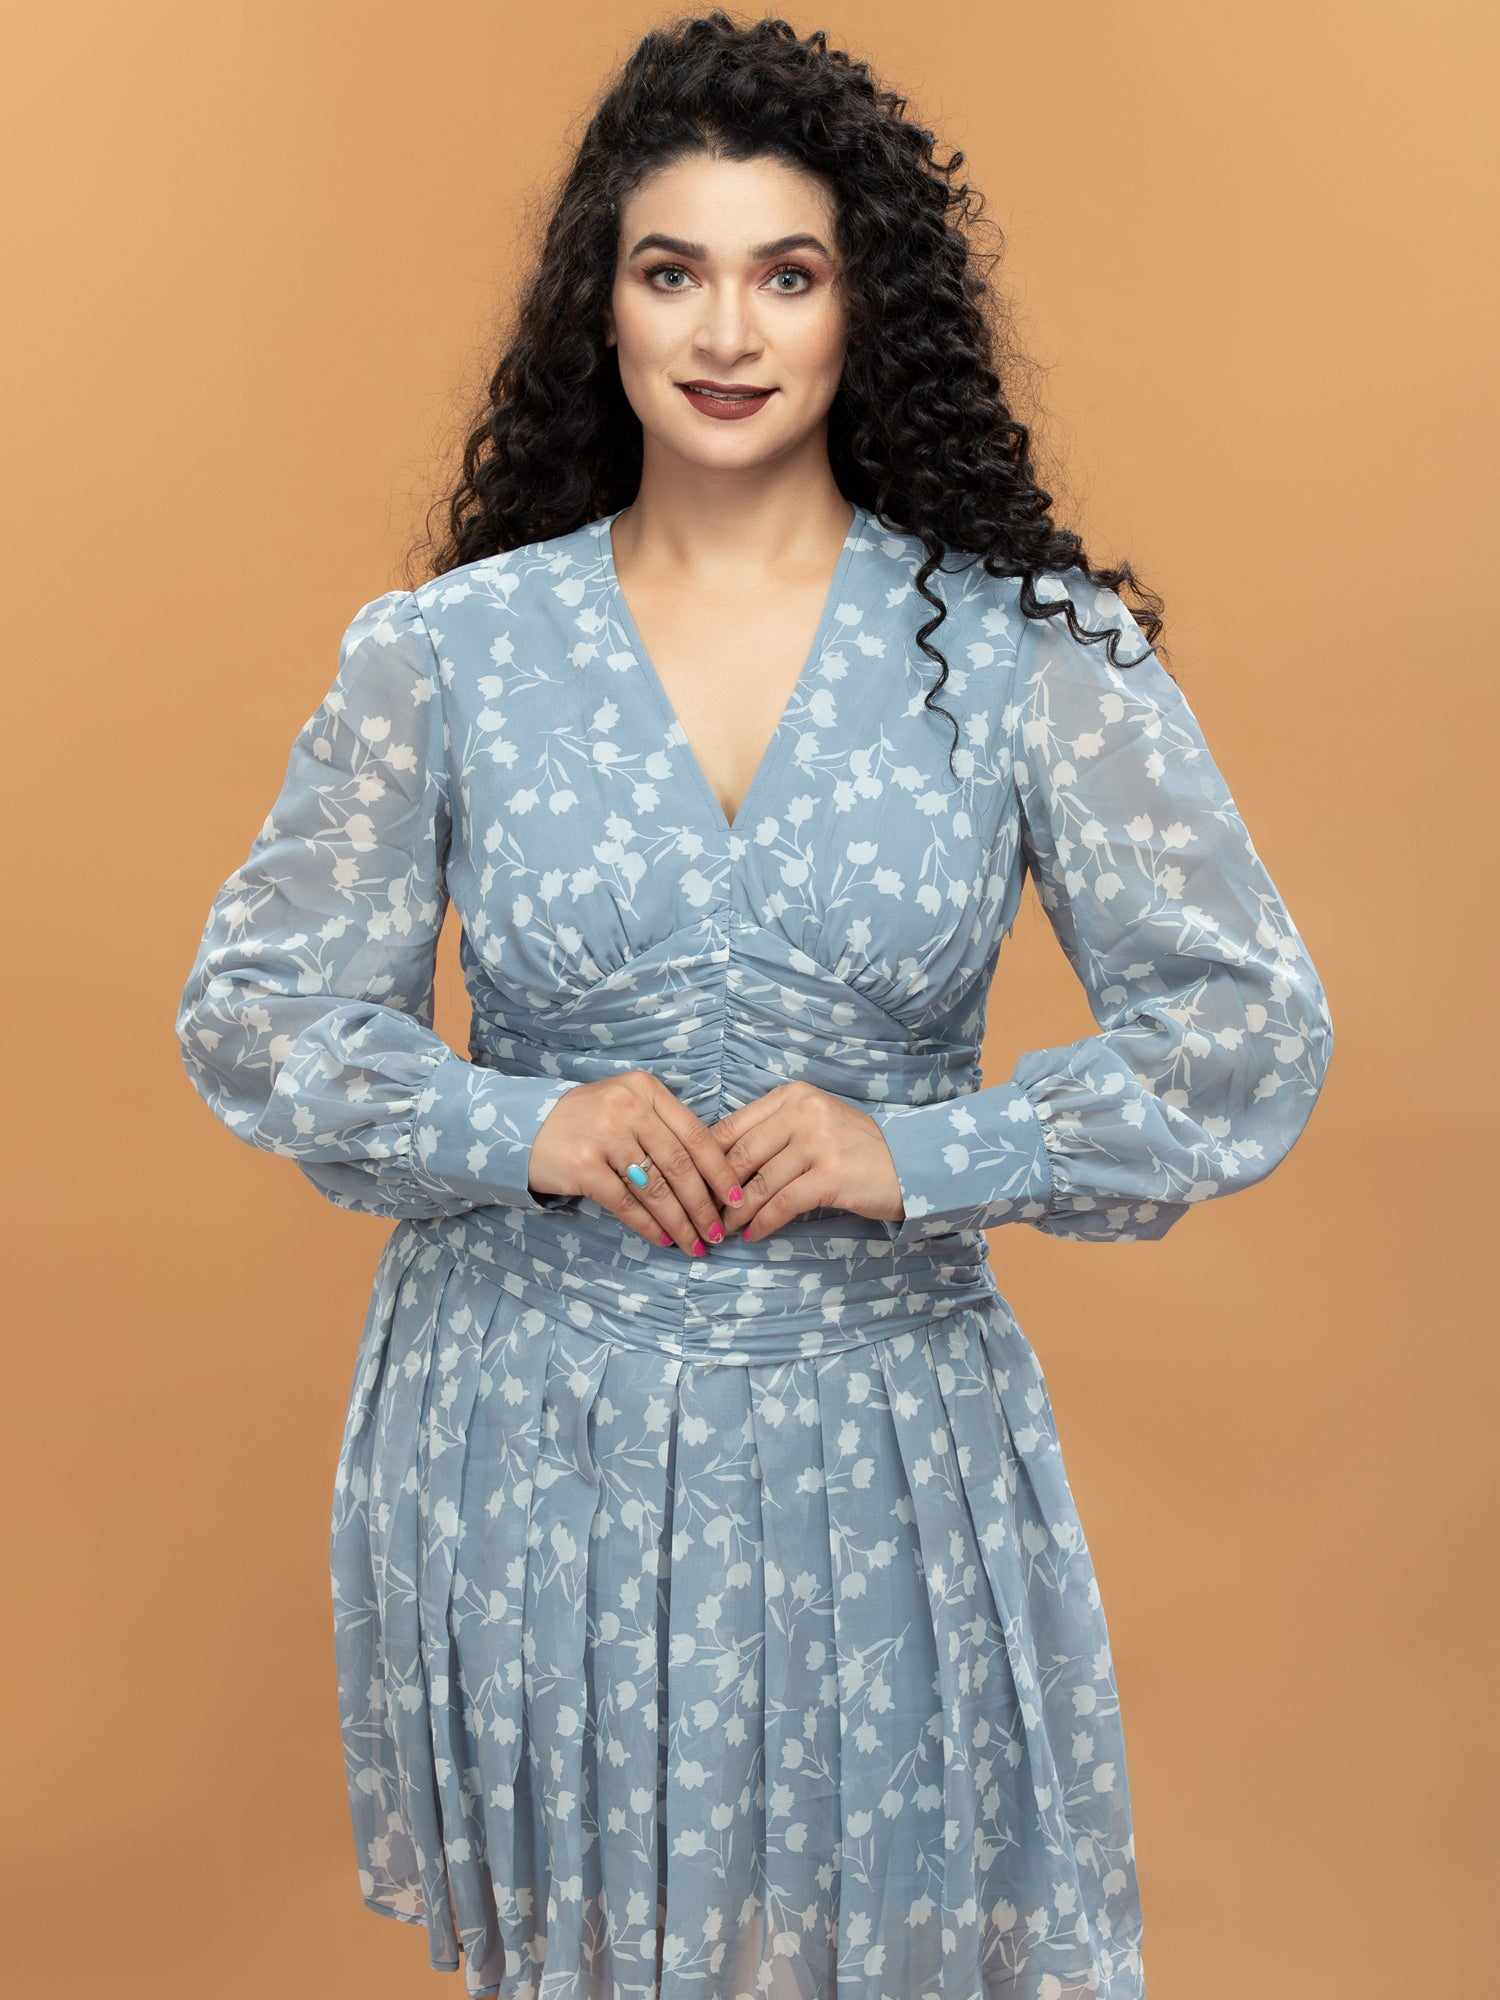 printed blue polka dots mesh dress